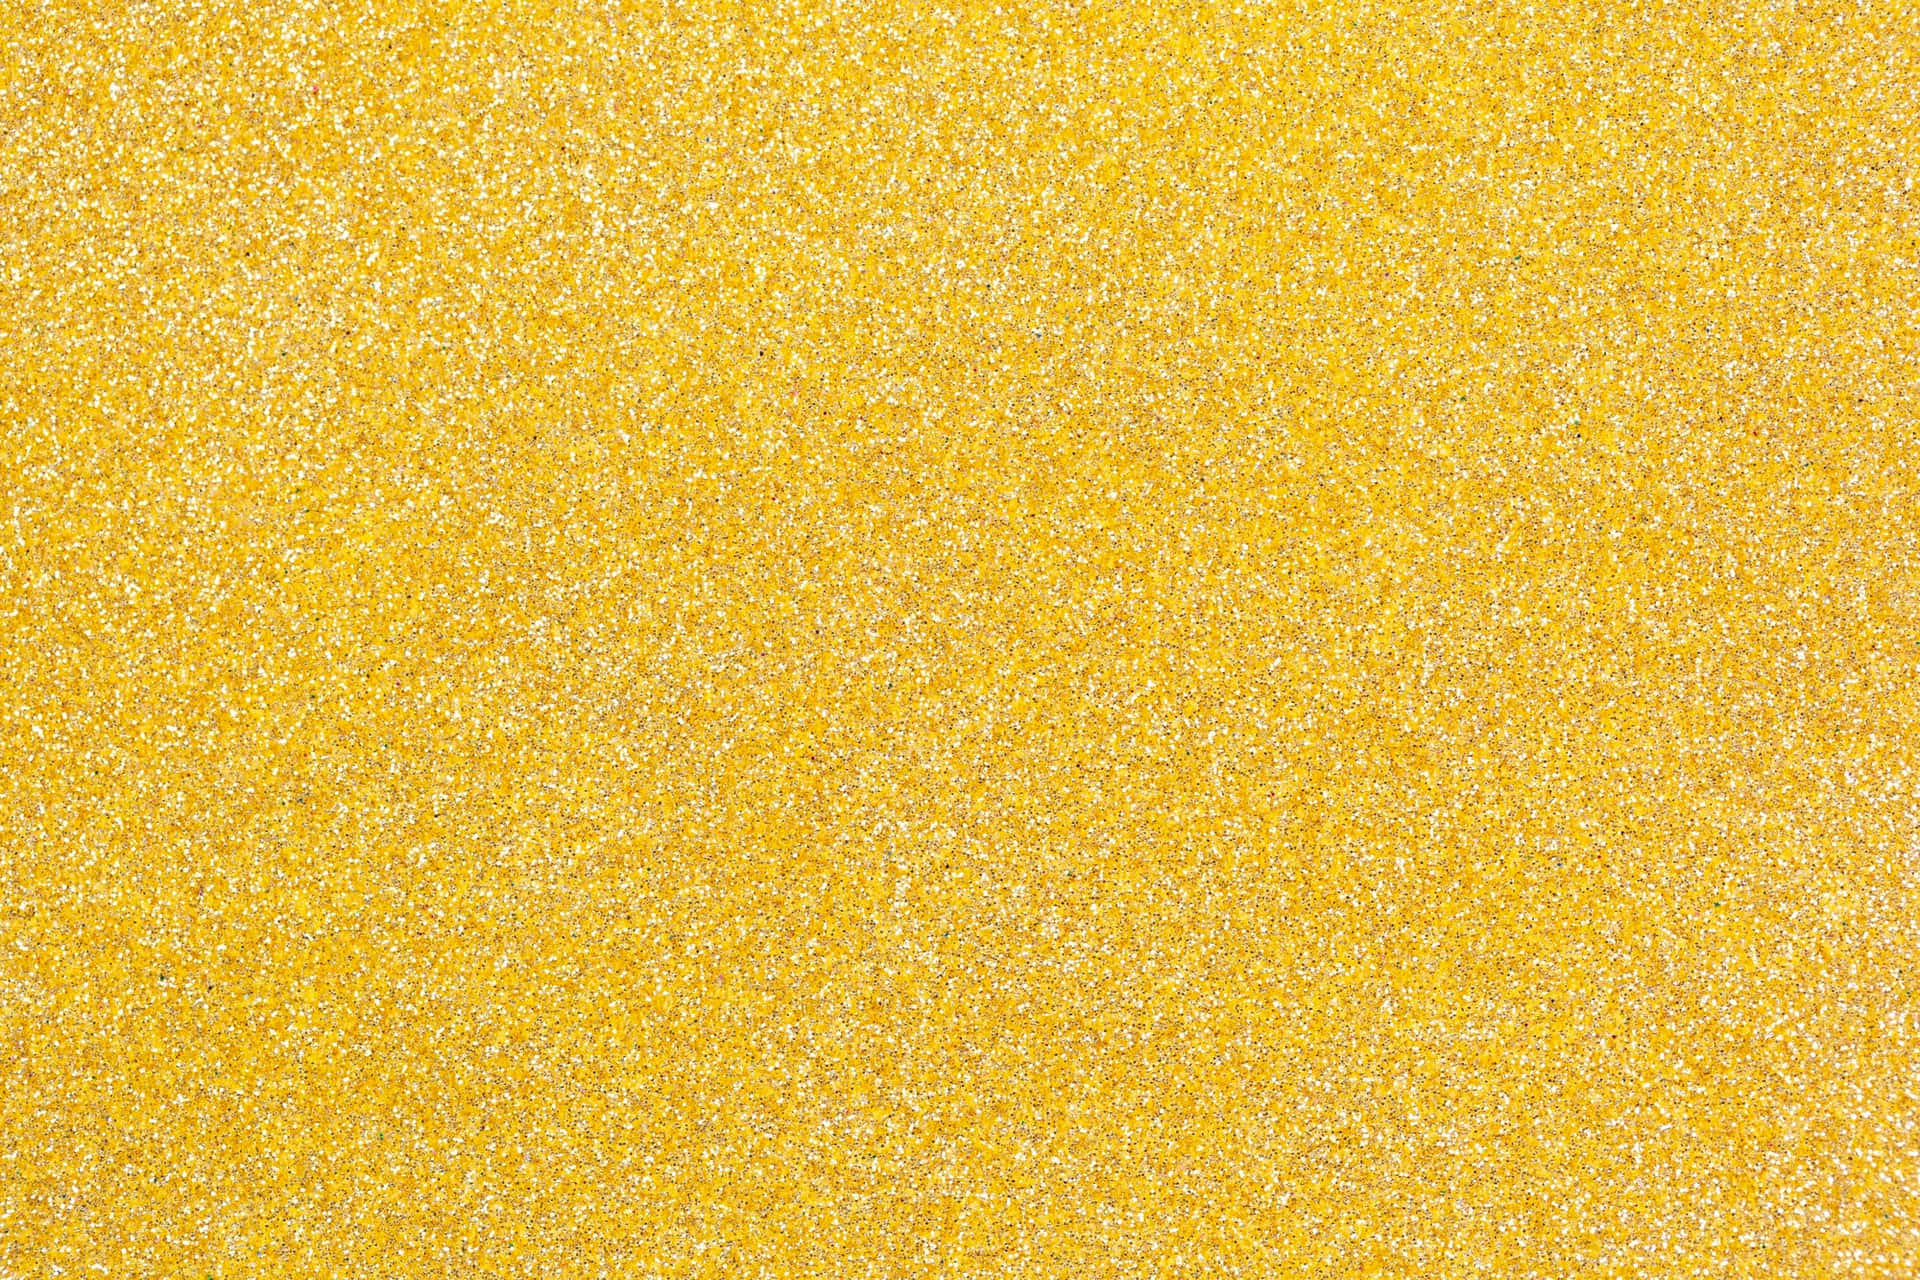 A dazzling array of yellow glitter Wallpaper